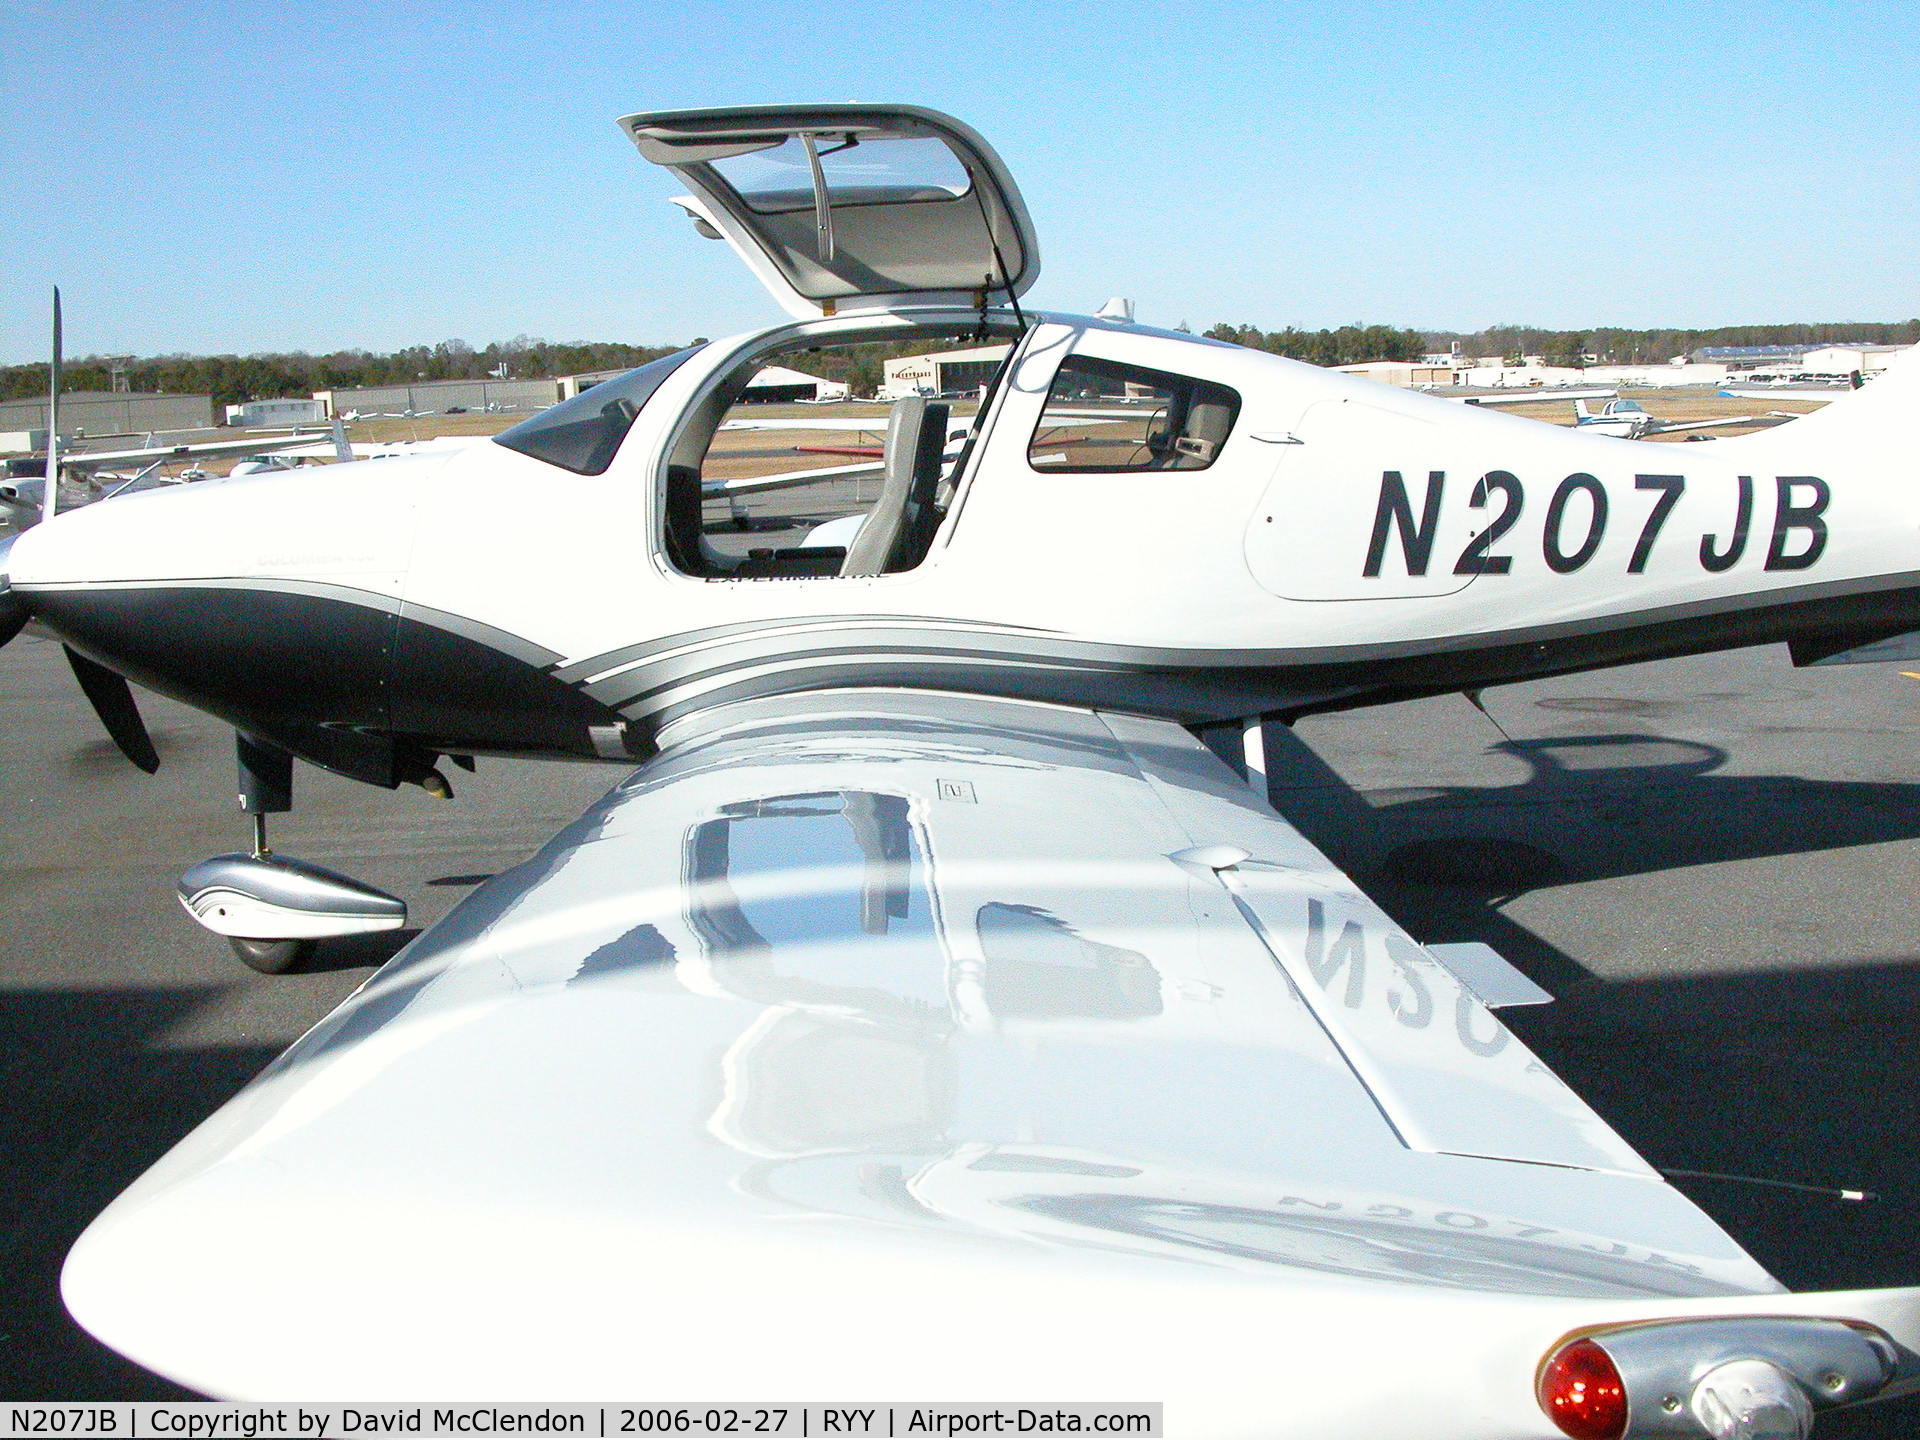 N207JB, Columbia Aircraft Mfg LC41-550FG C/N 41564, I demo'd this beauty at RYY, WOW!